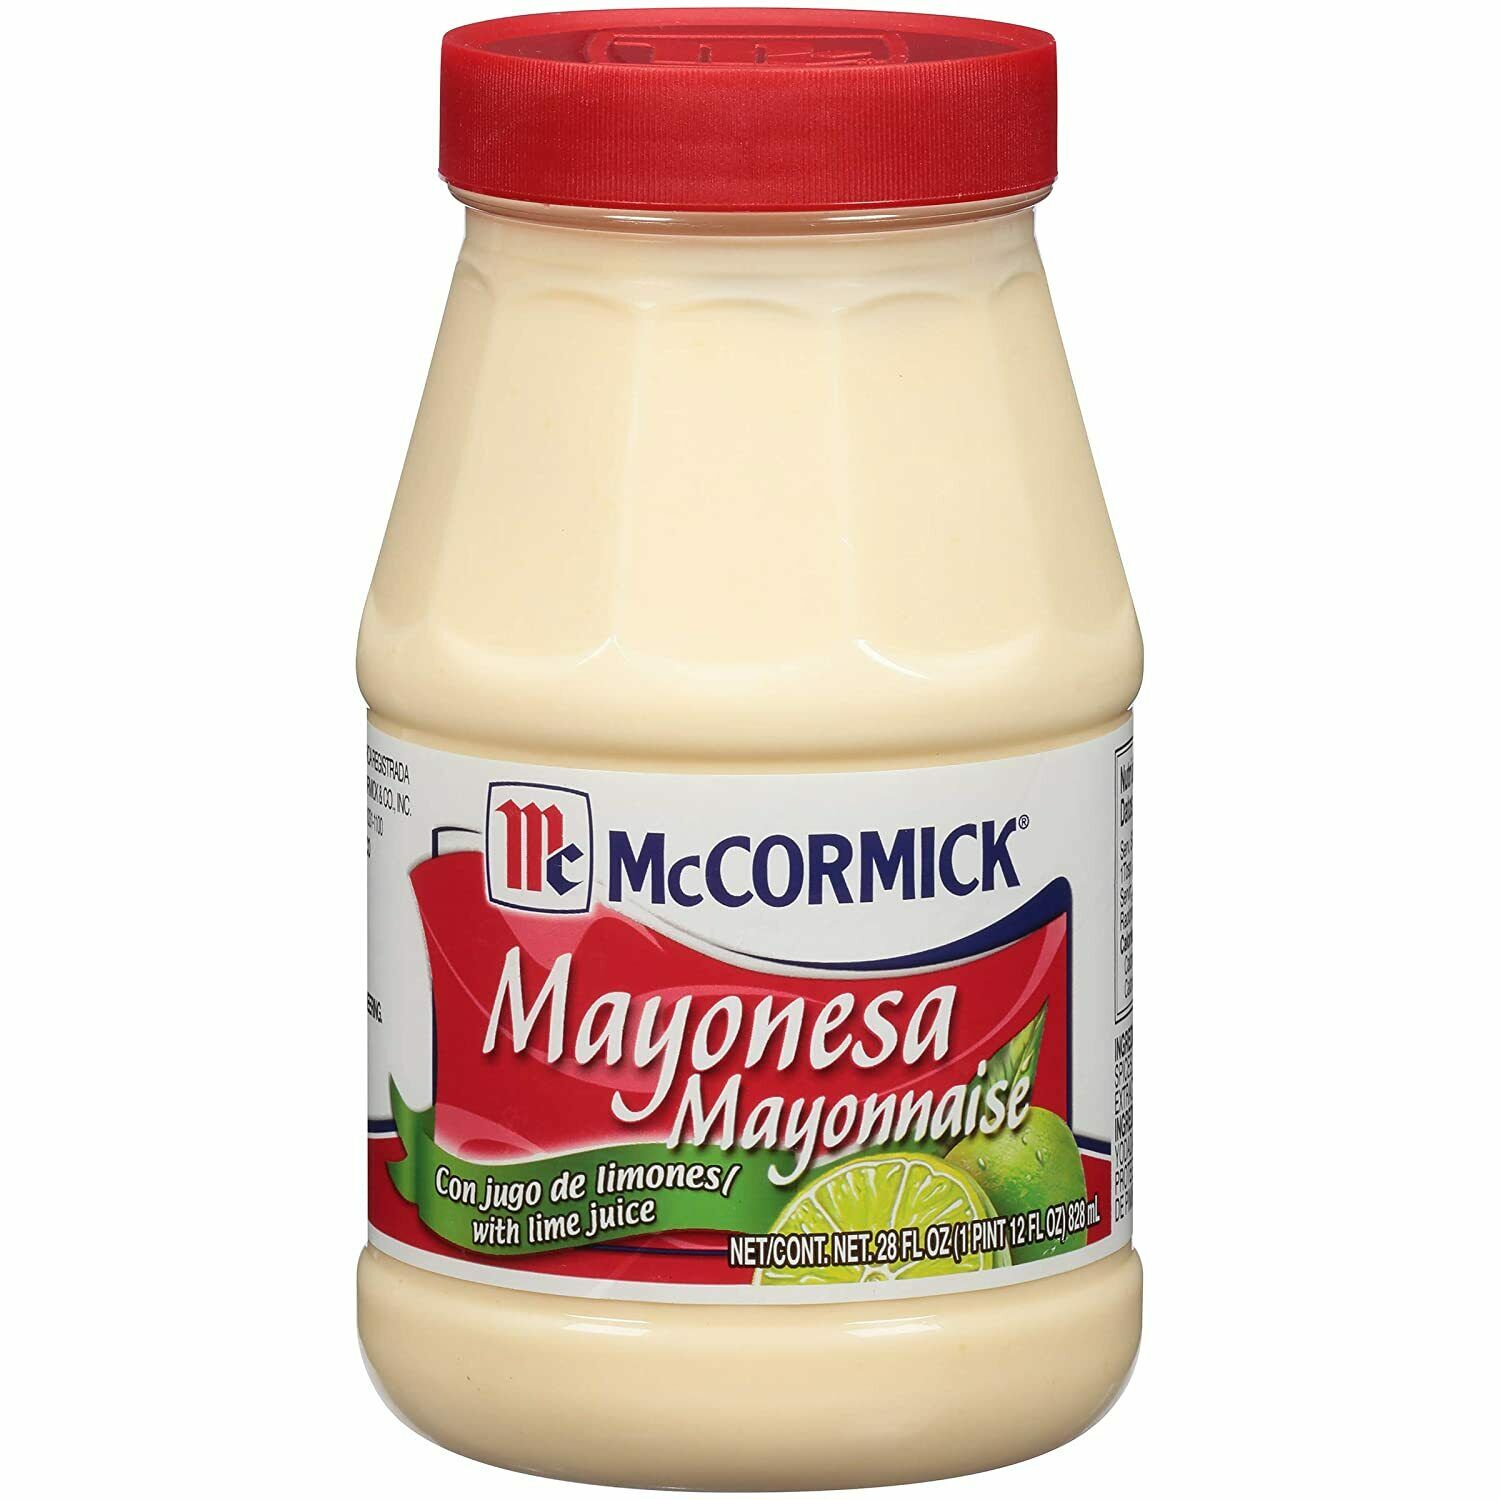 Mccormick Mayonesa (mayonnaise) With Lime Juice, 28 Fl Oz